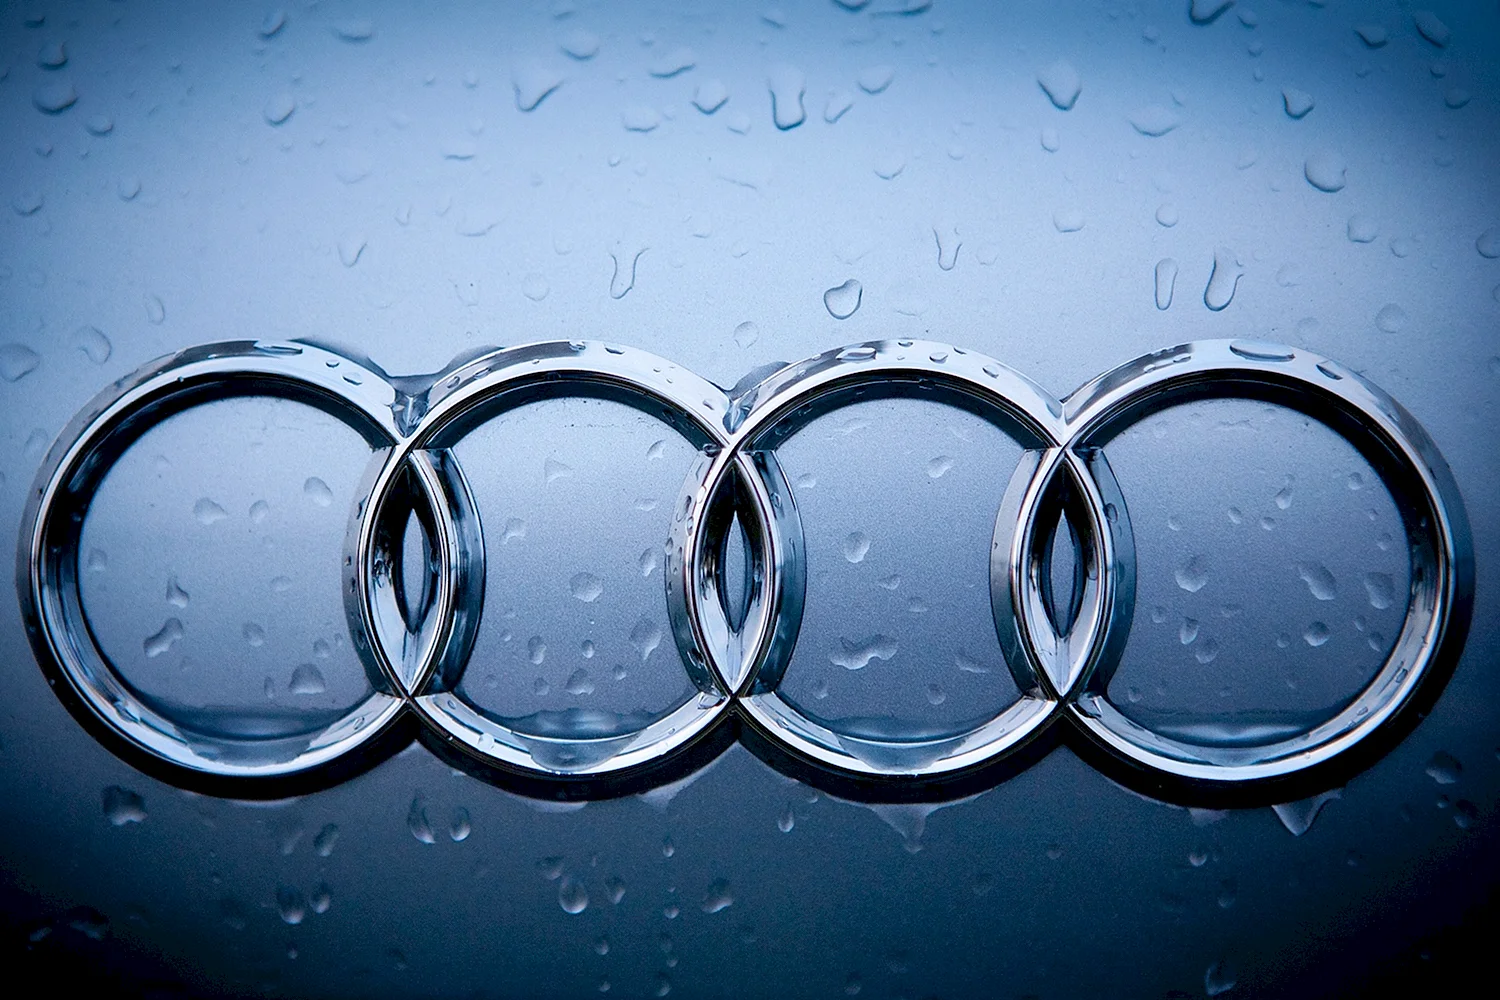 Audi logo 2009